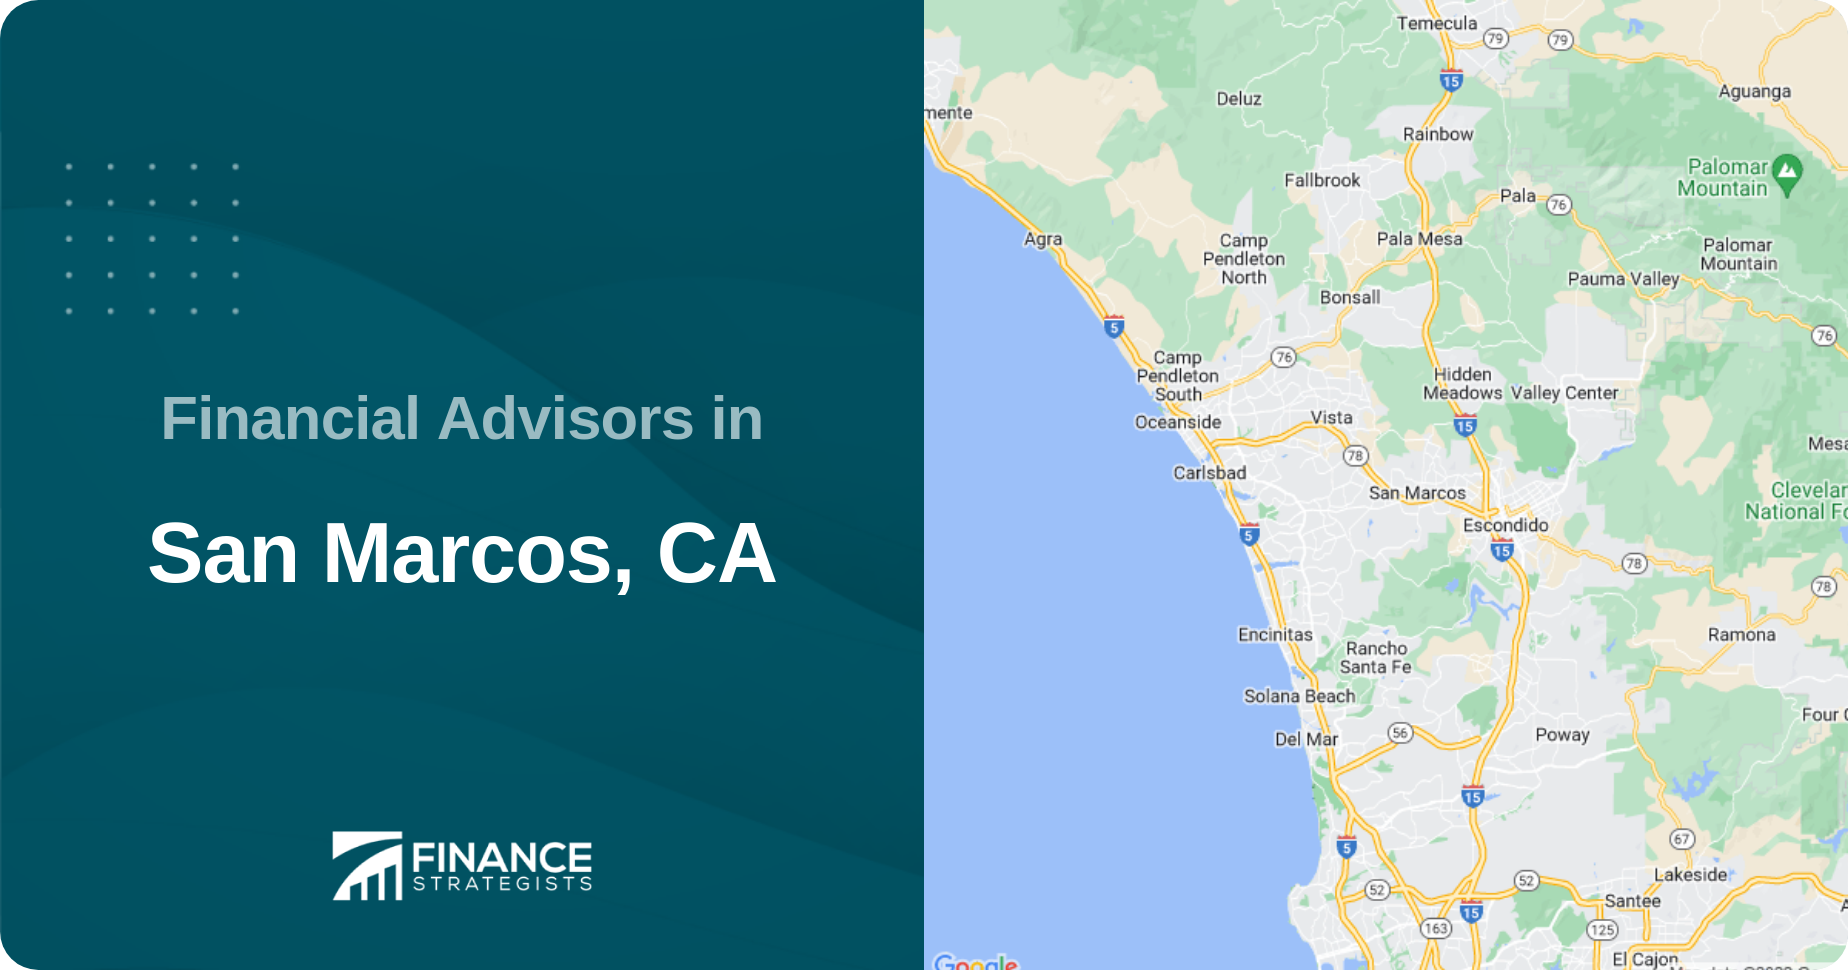 Financial Advisors in San Marcos, CA